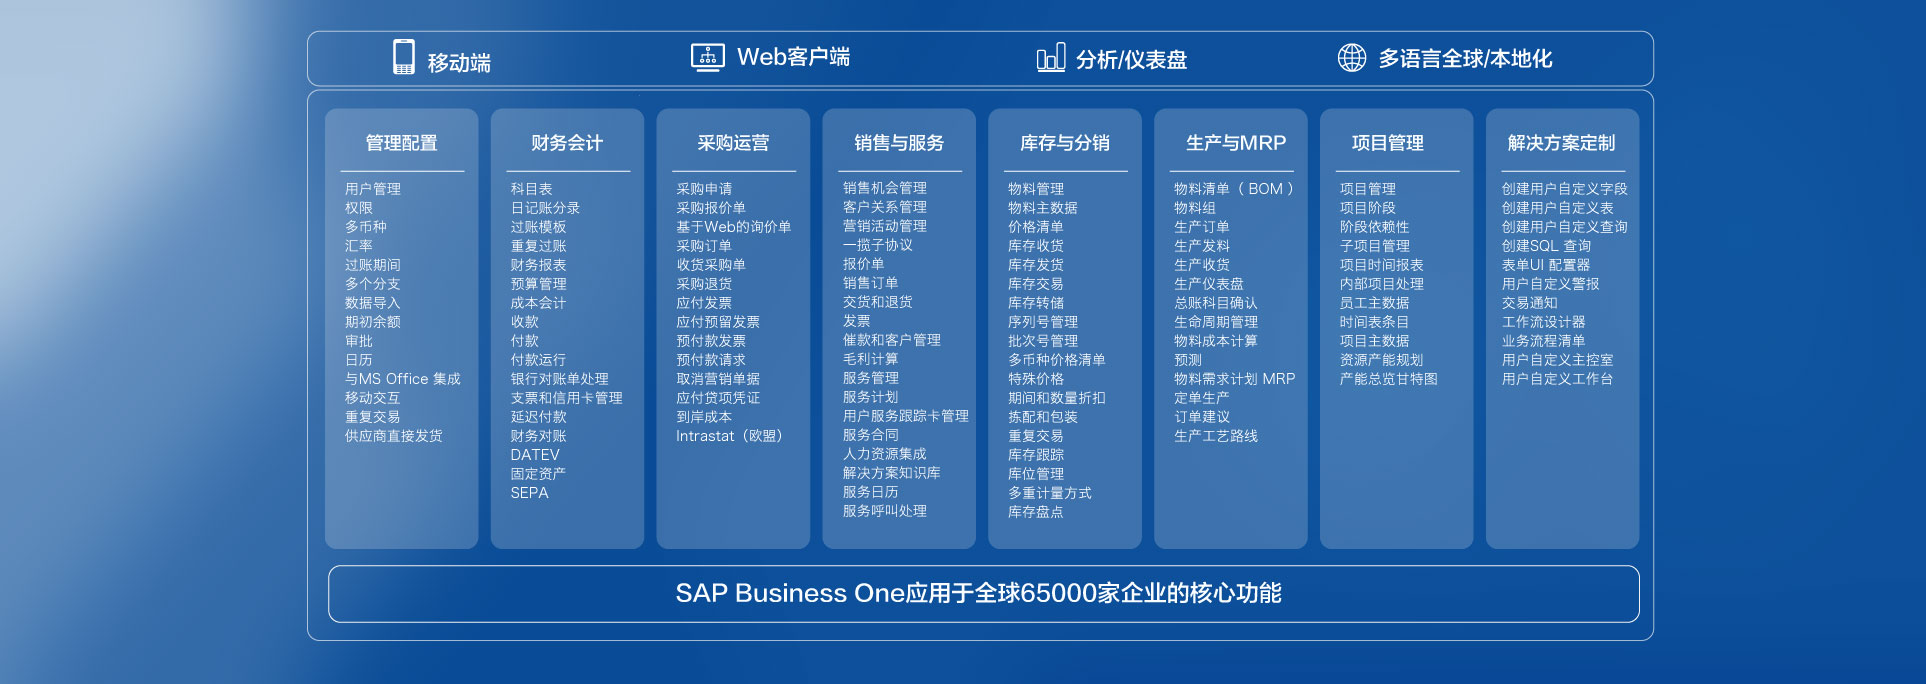 SAP Business One核心功能